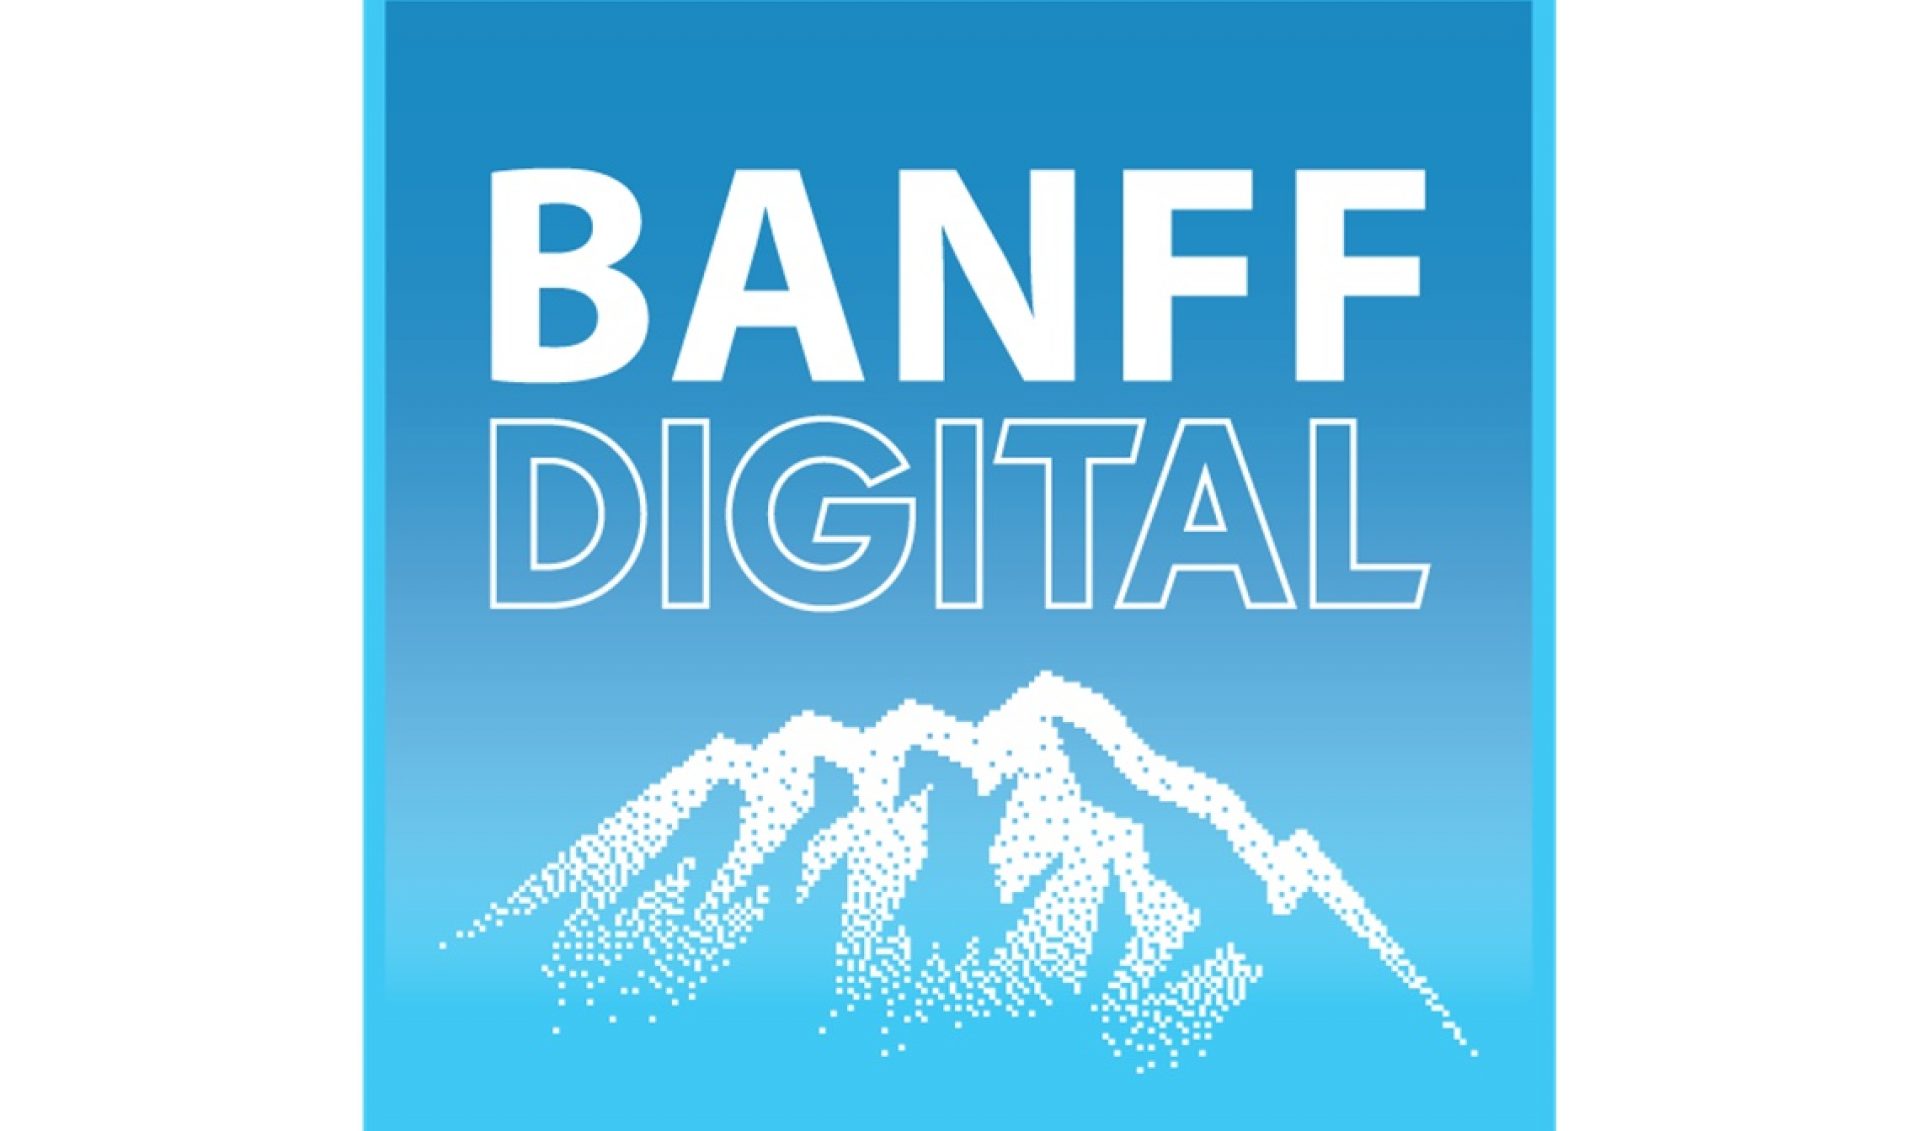 Digital Media Notables To Head To Banff Between June 13-15